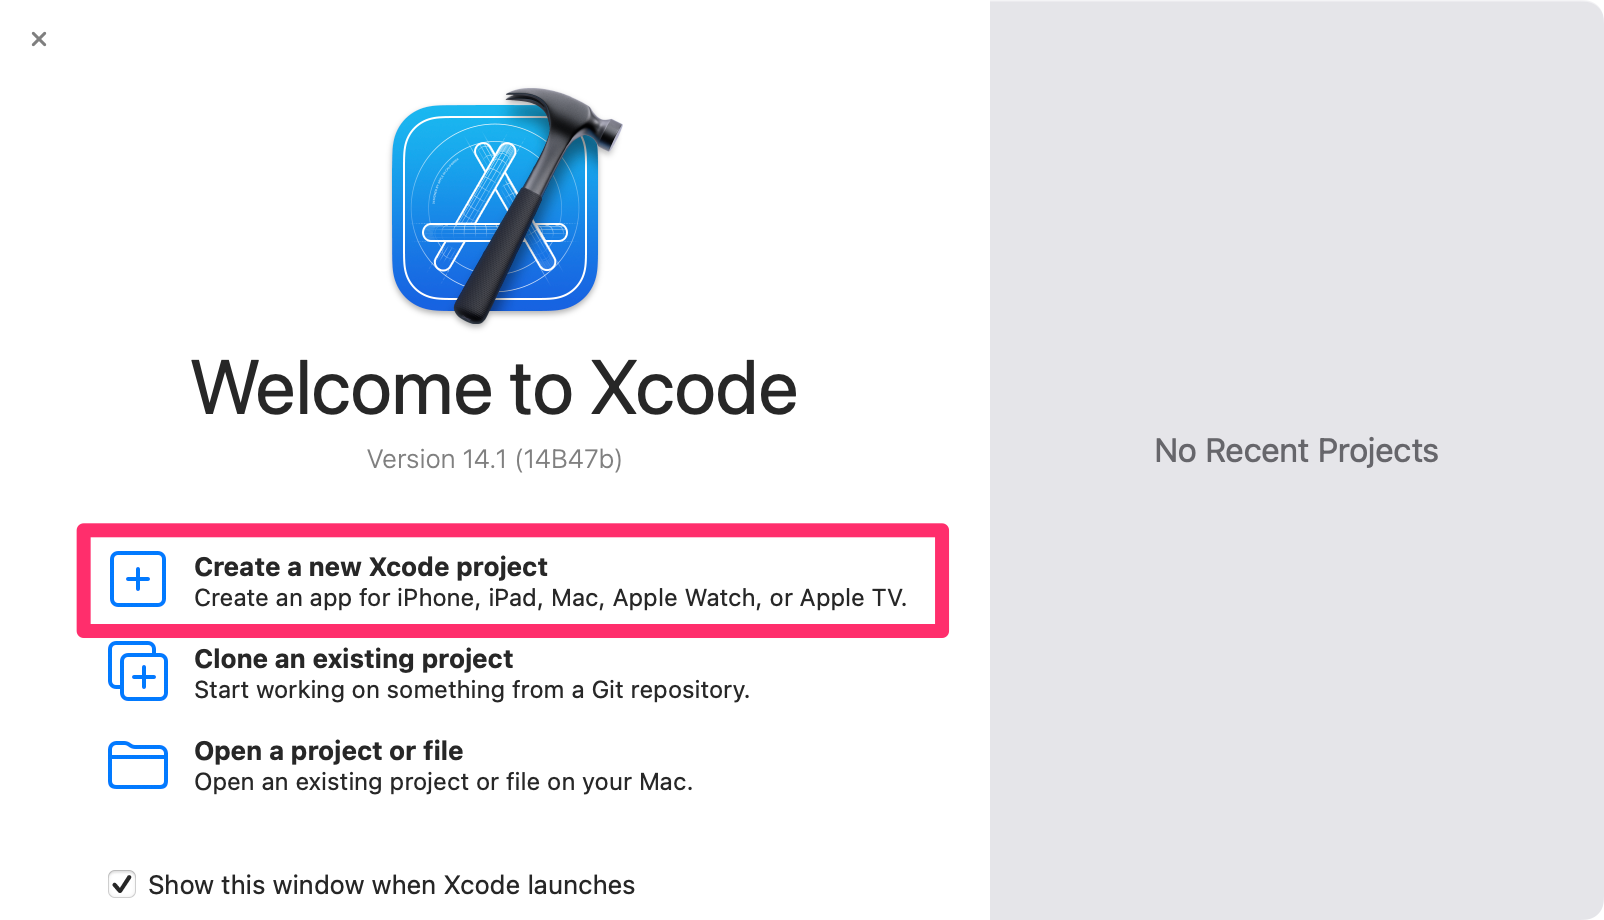 Welcome to Xcode window